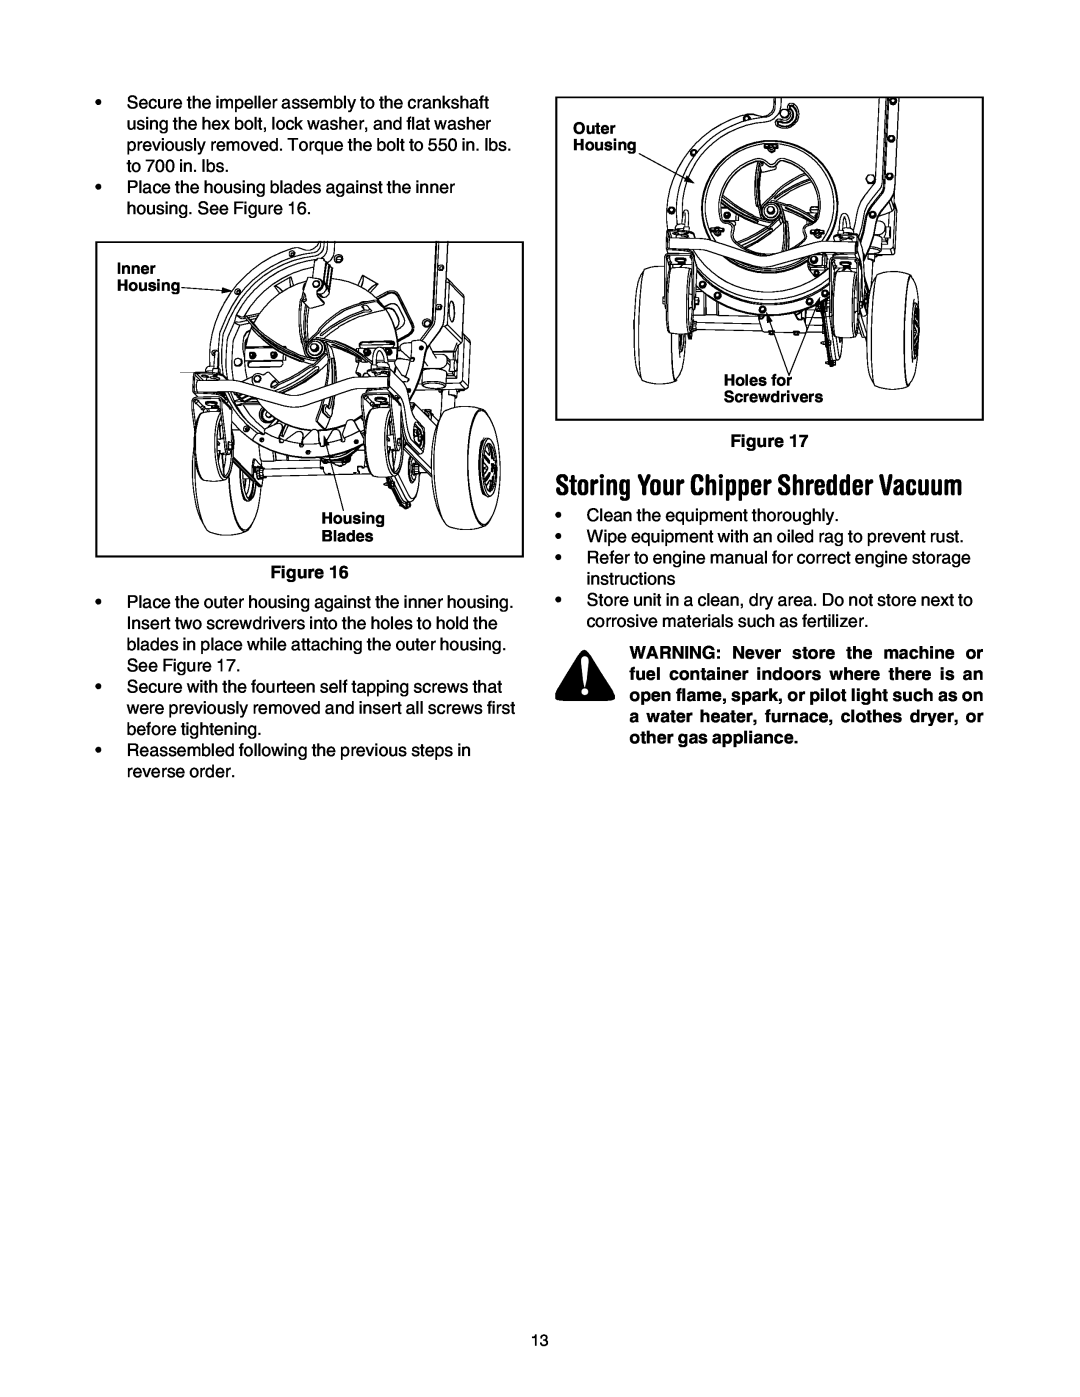 MTD 203 manual Storing Your Chipper Shredder Vacuum 